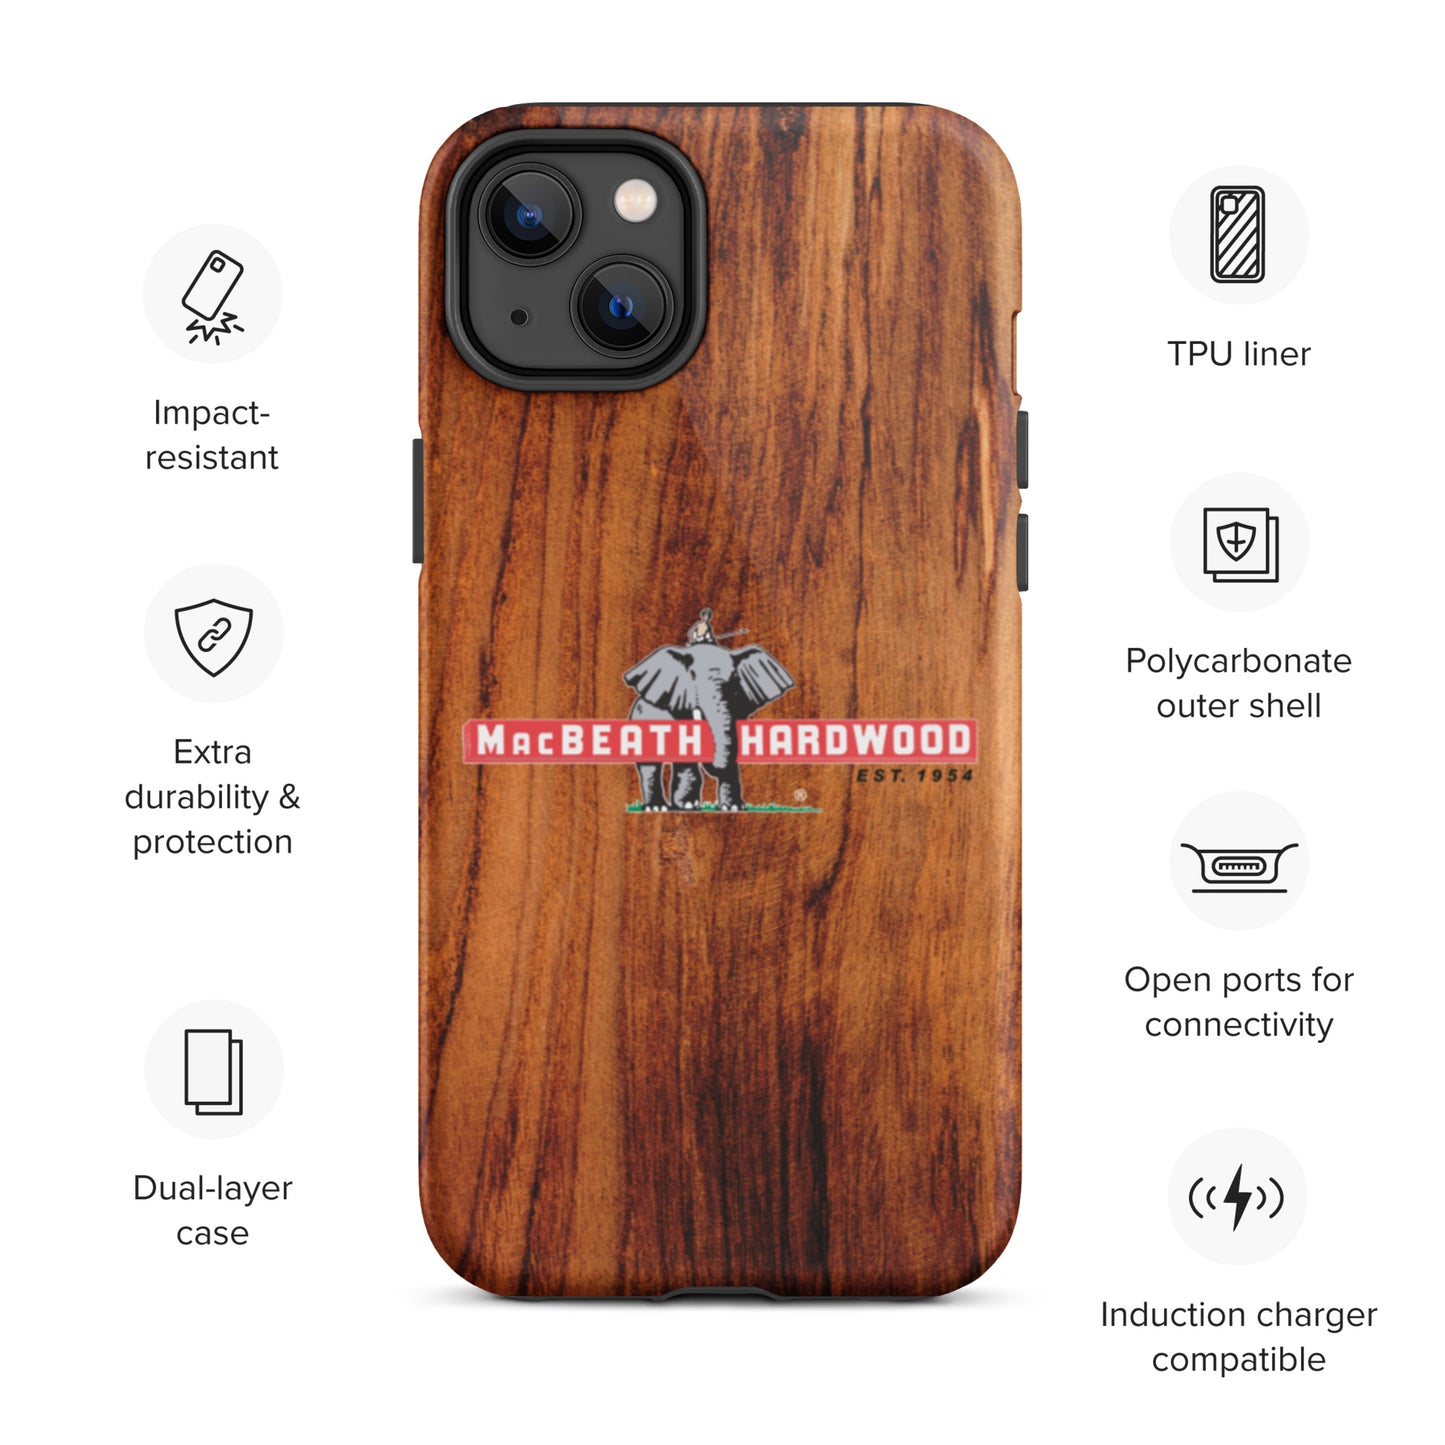 MacBeath Hardwood Tough iPhone case